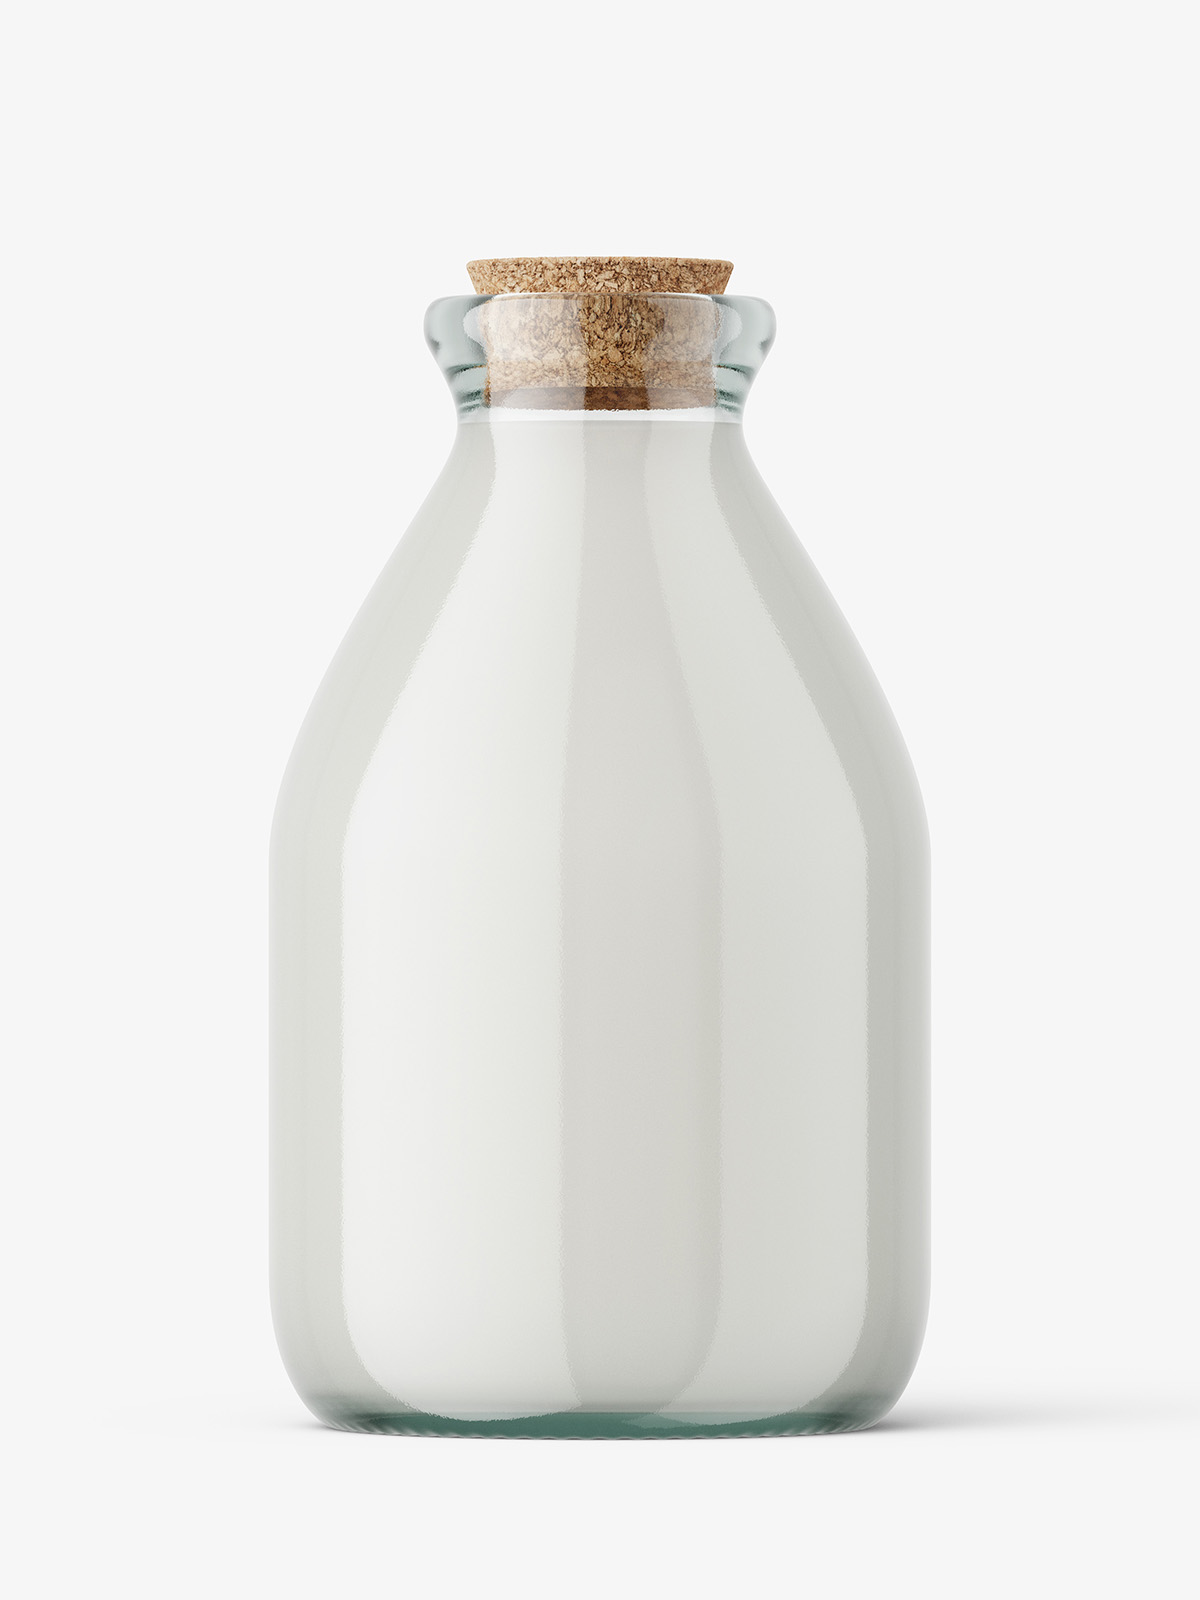 https://smartymockups.com/wp-content/uploads/2021/05/Milk_Bottle_Mockup_1-1.jpg